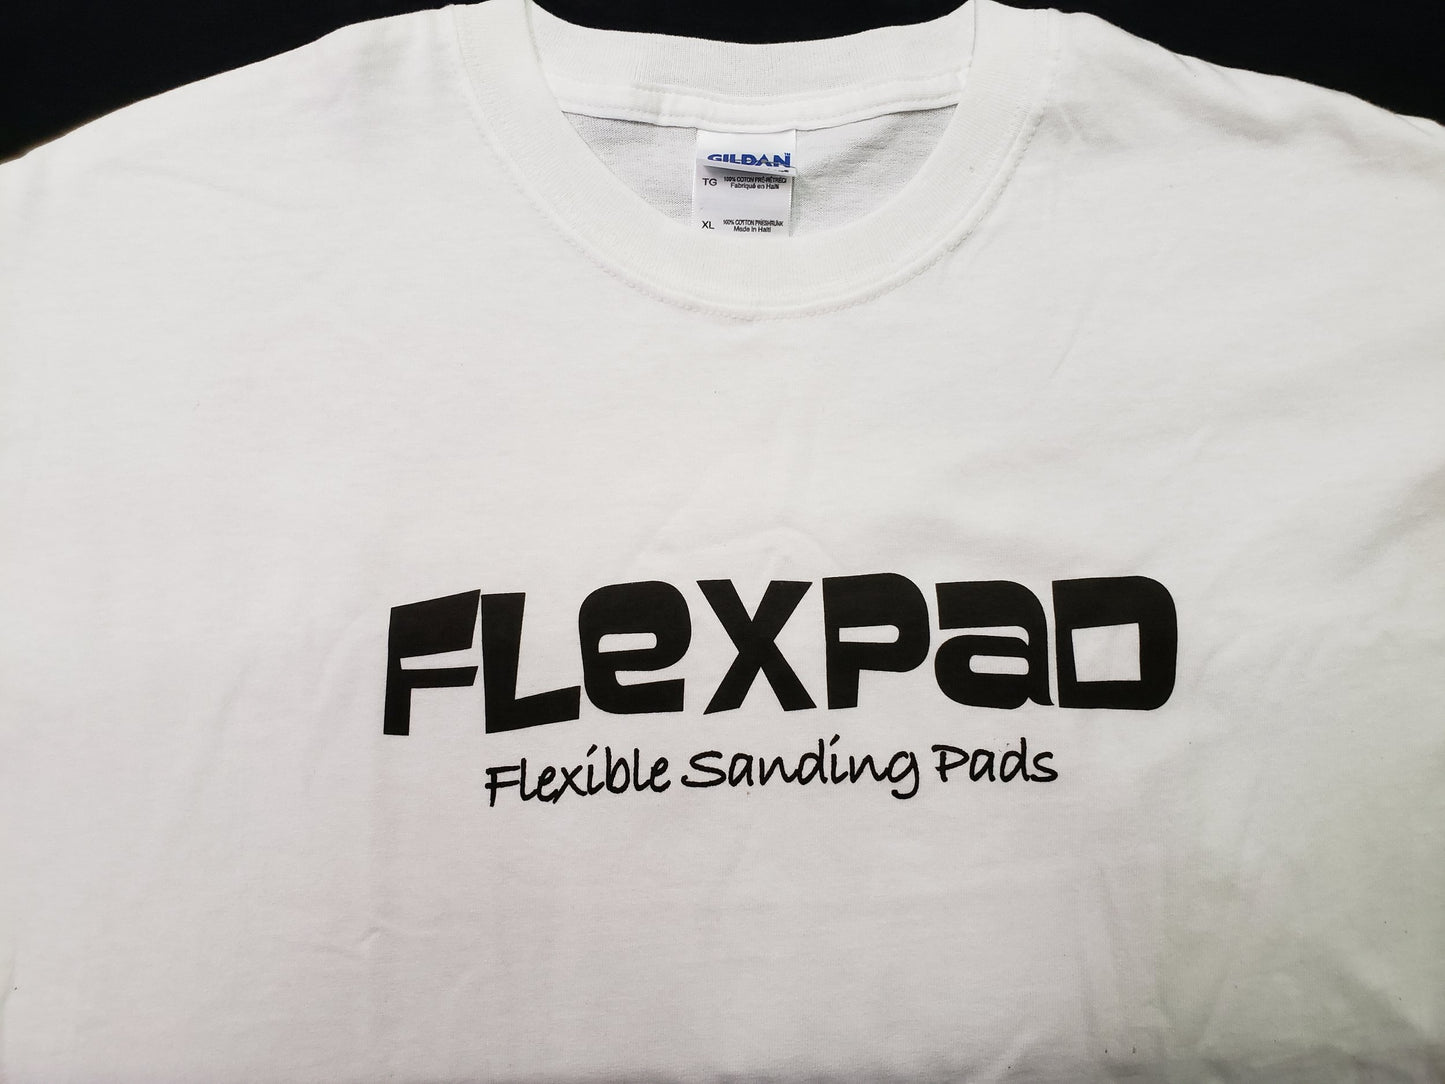 FLEXPAD T-SHIRT